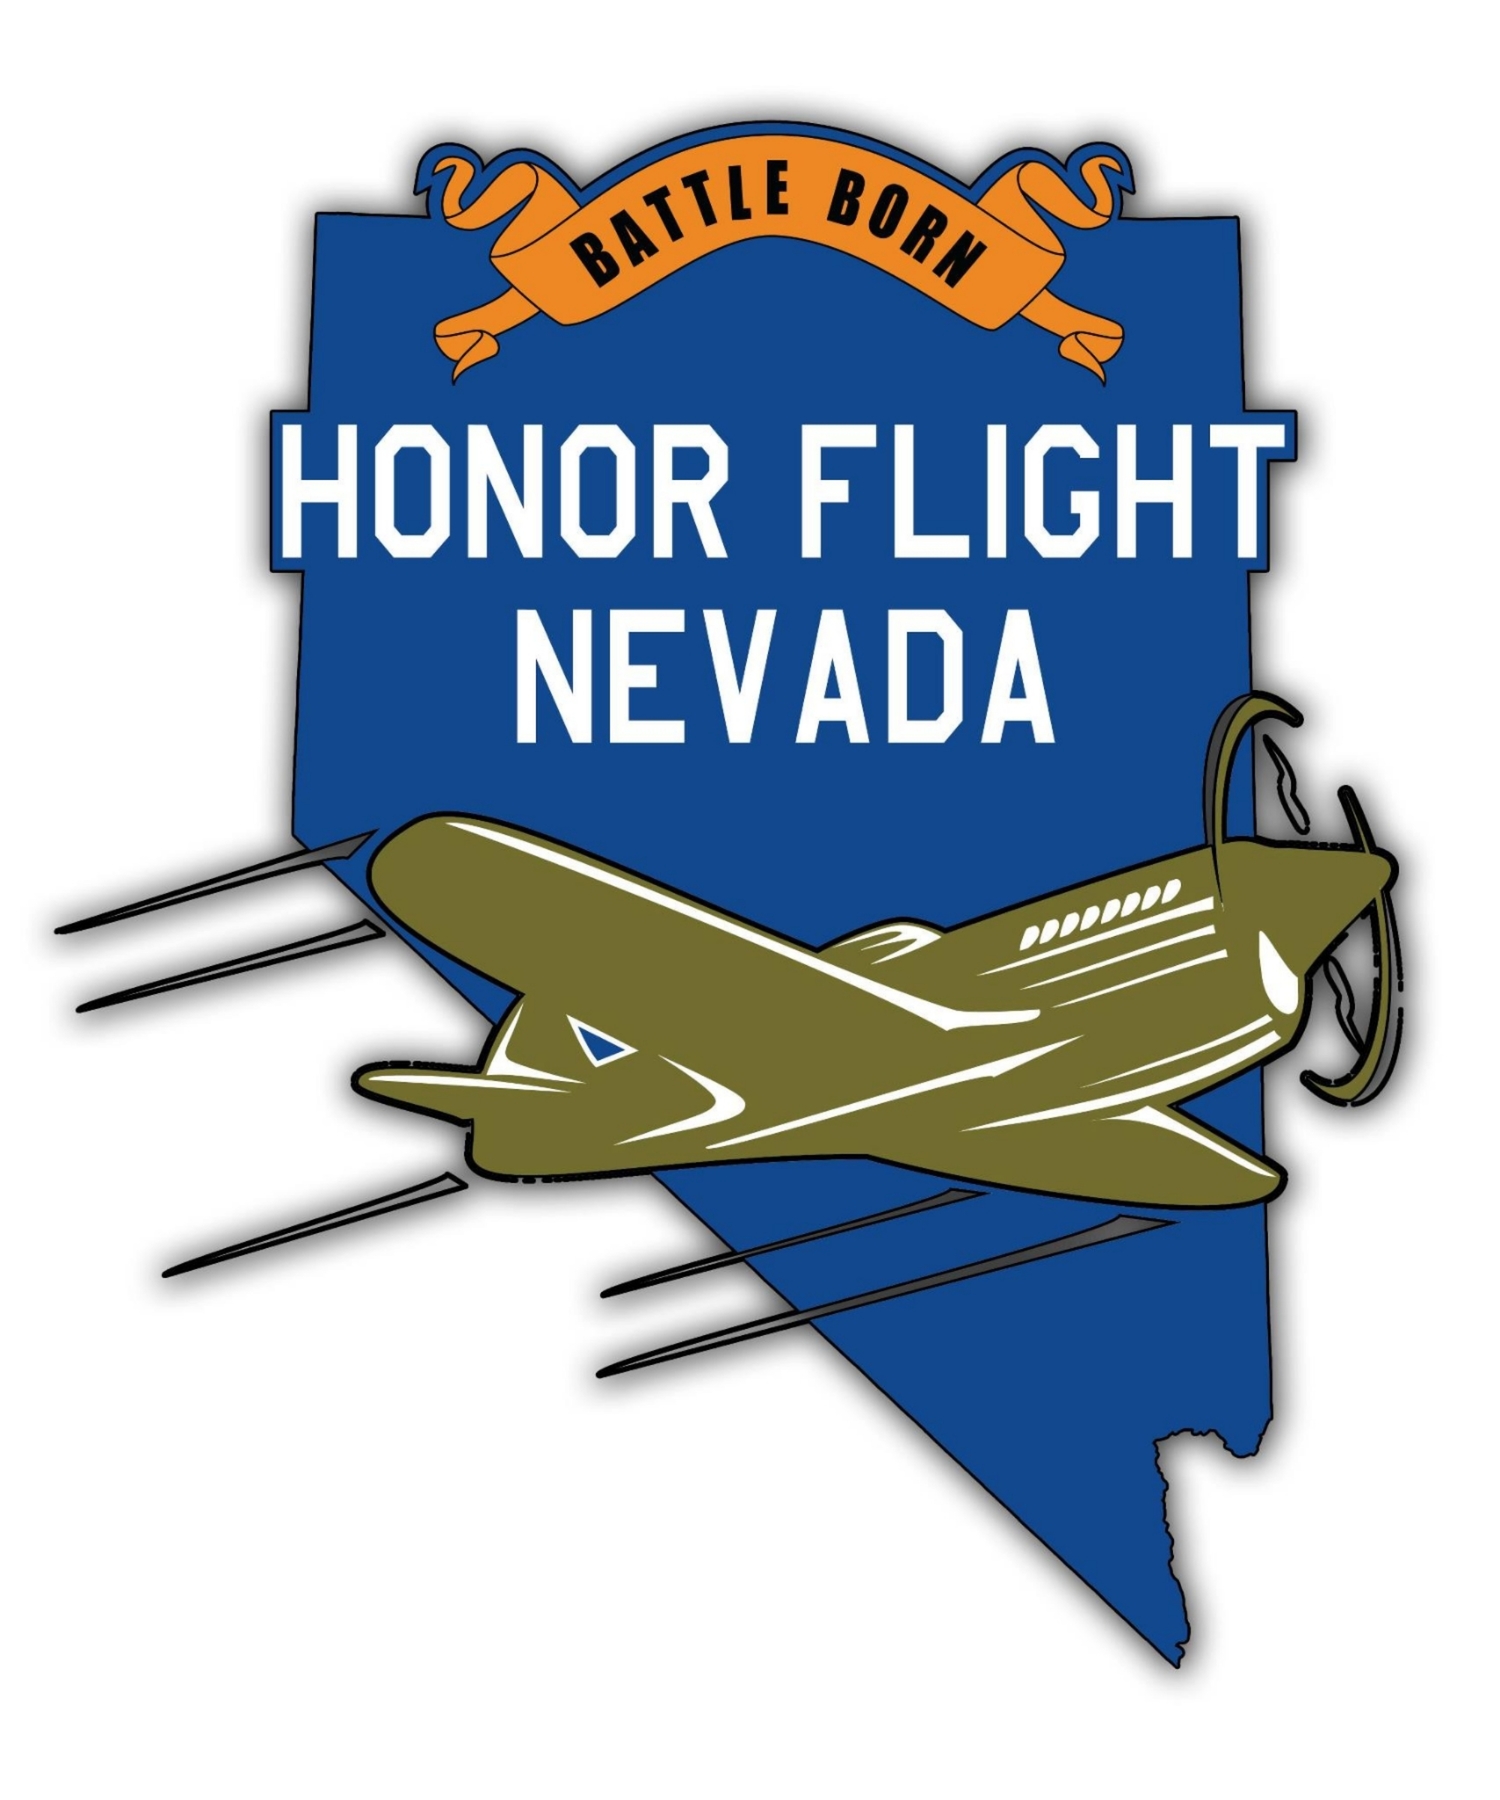 Honor Flight Nevada